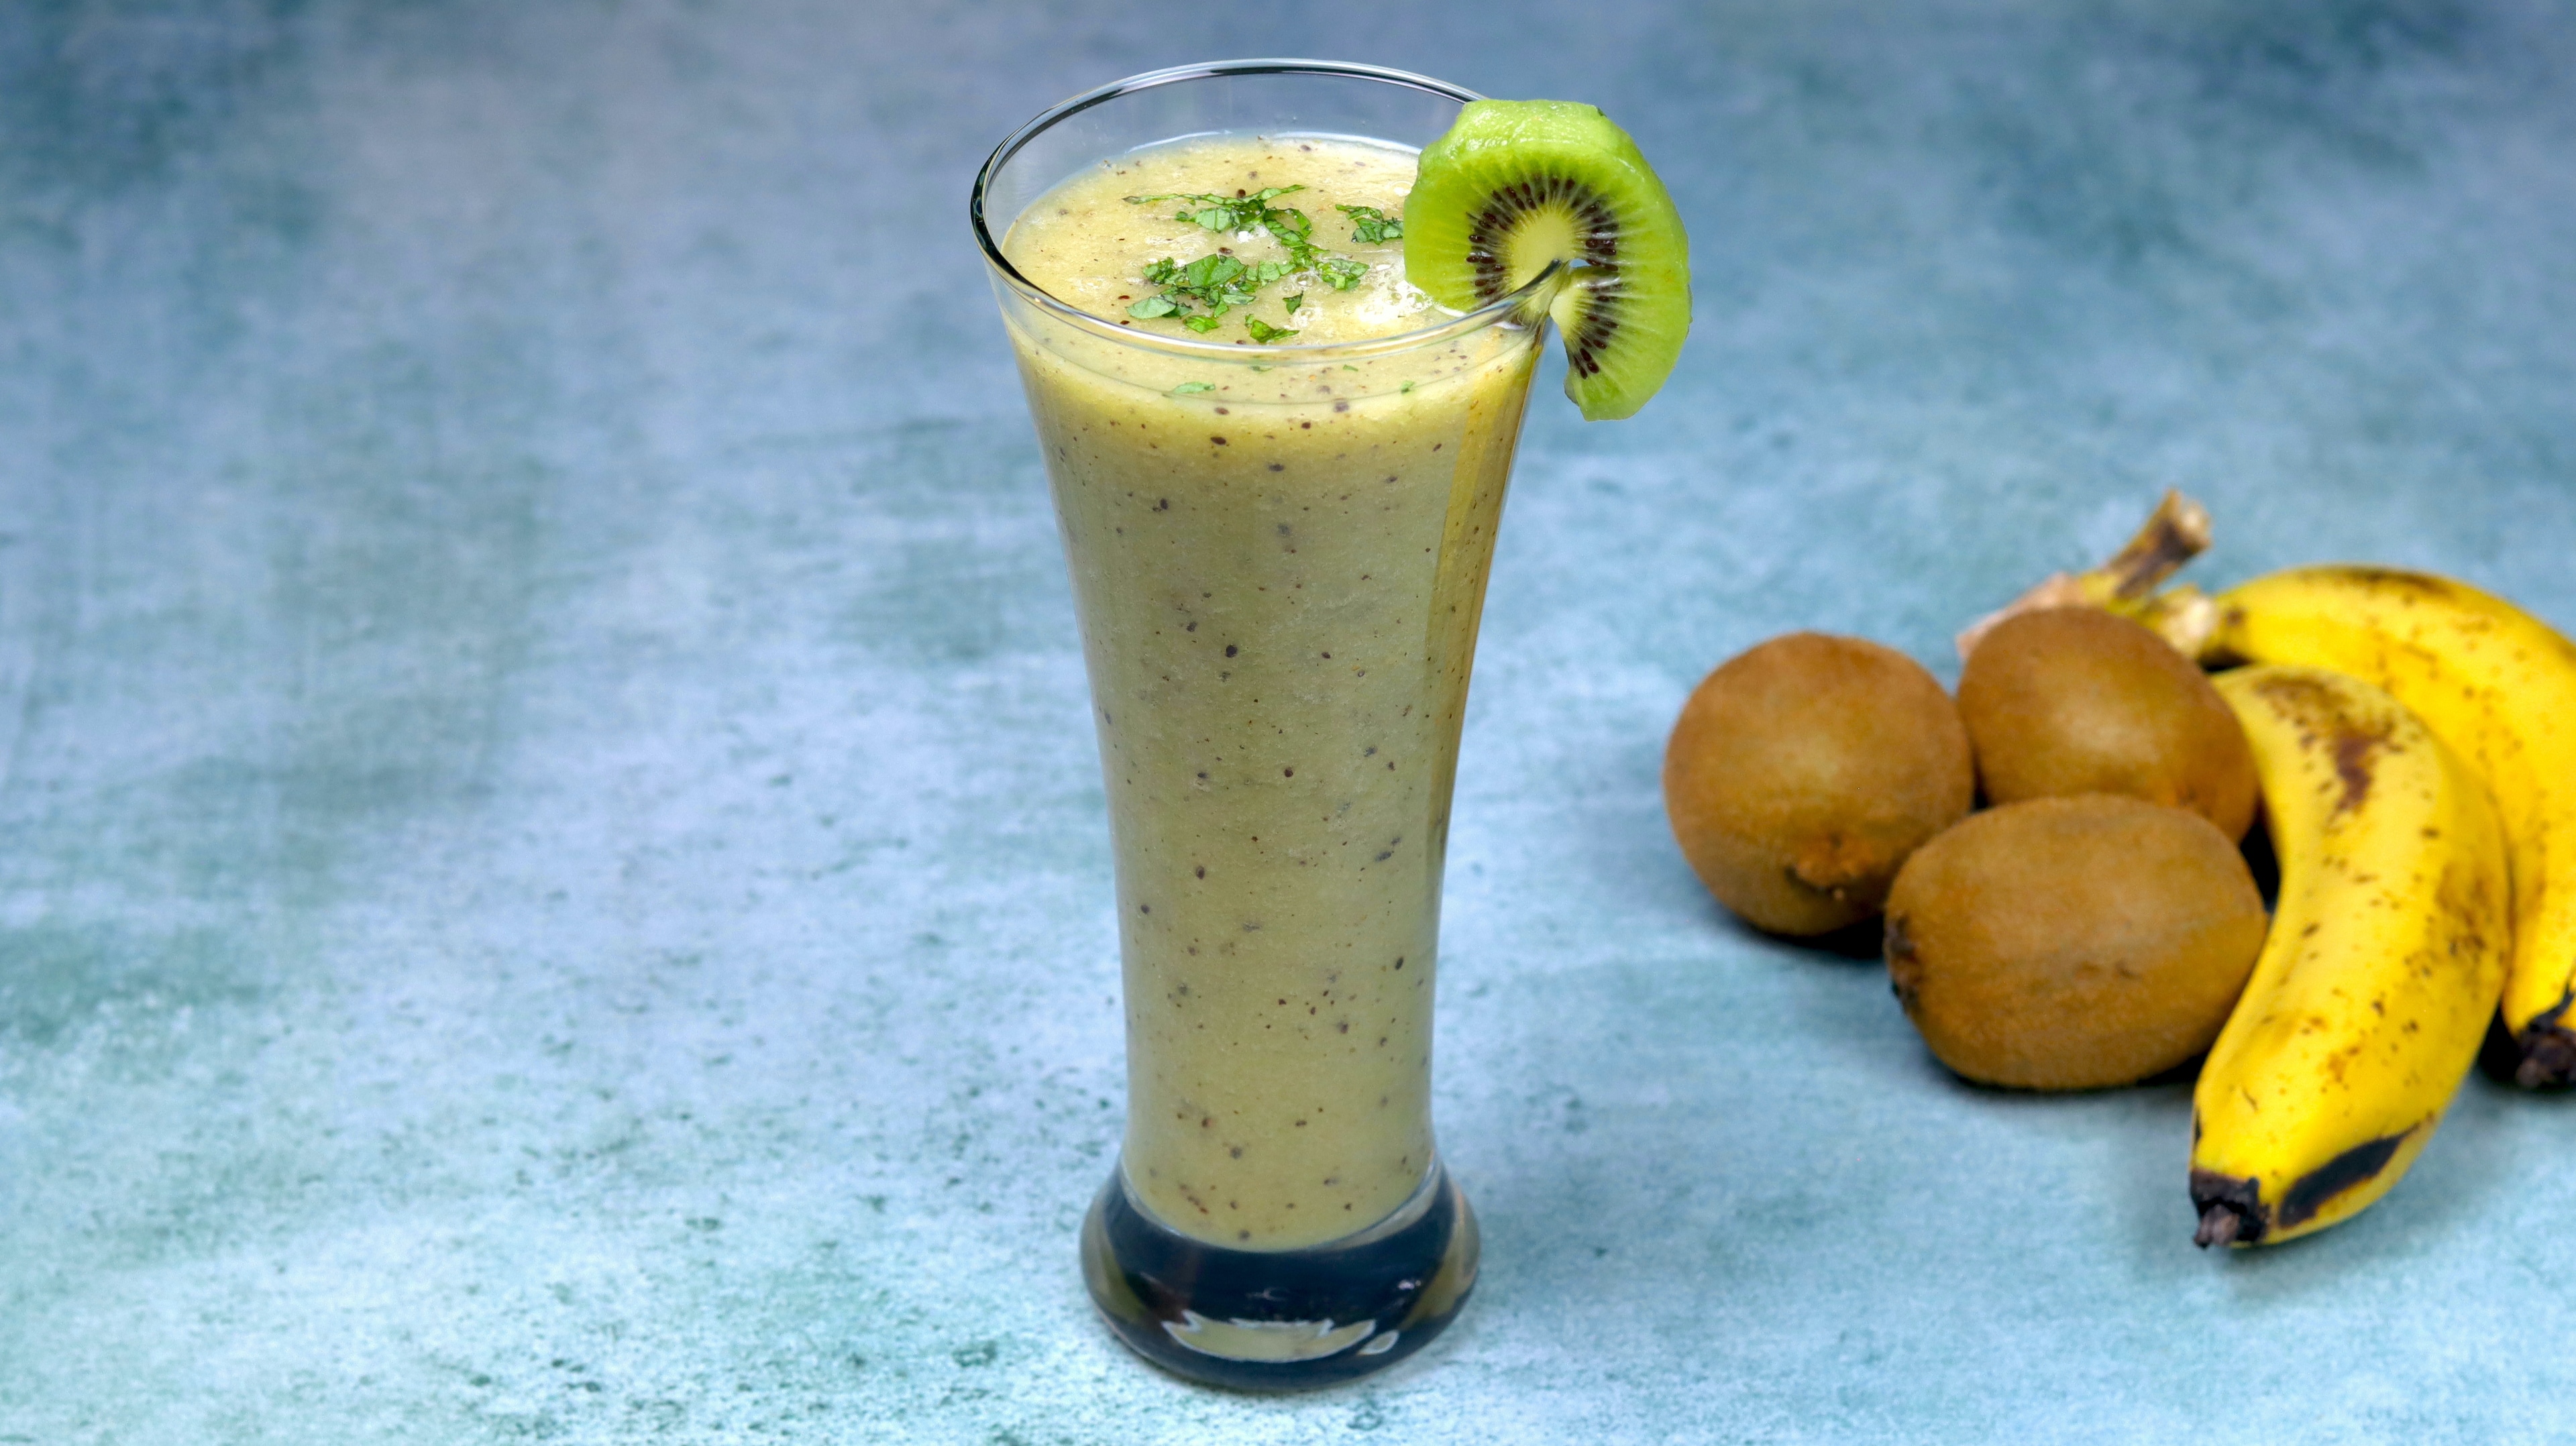 Kiwi Banana Smoothie - Tasted Recipes